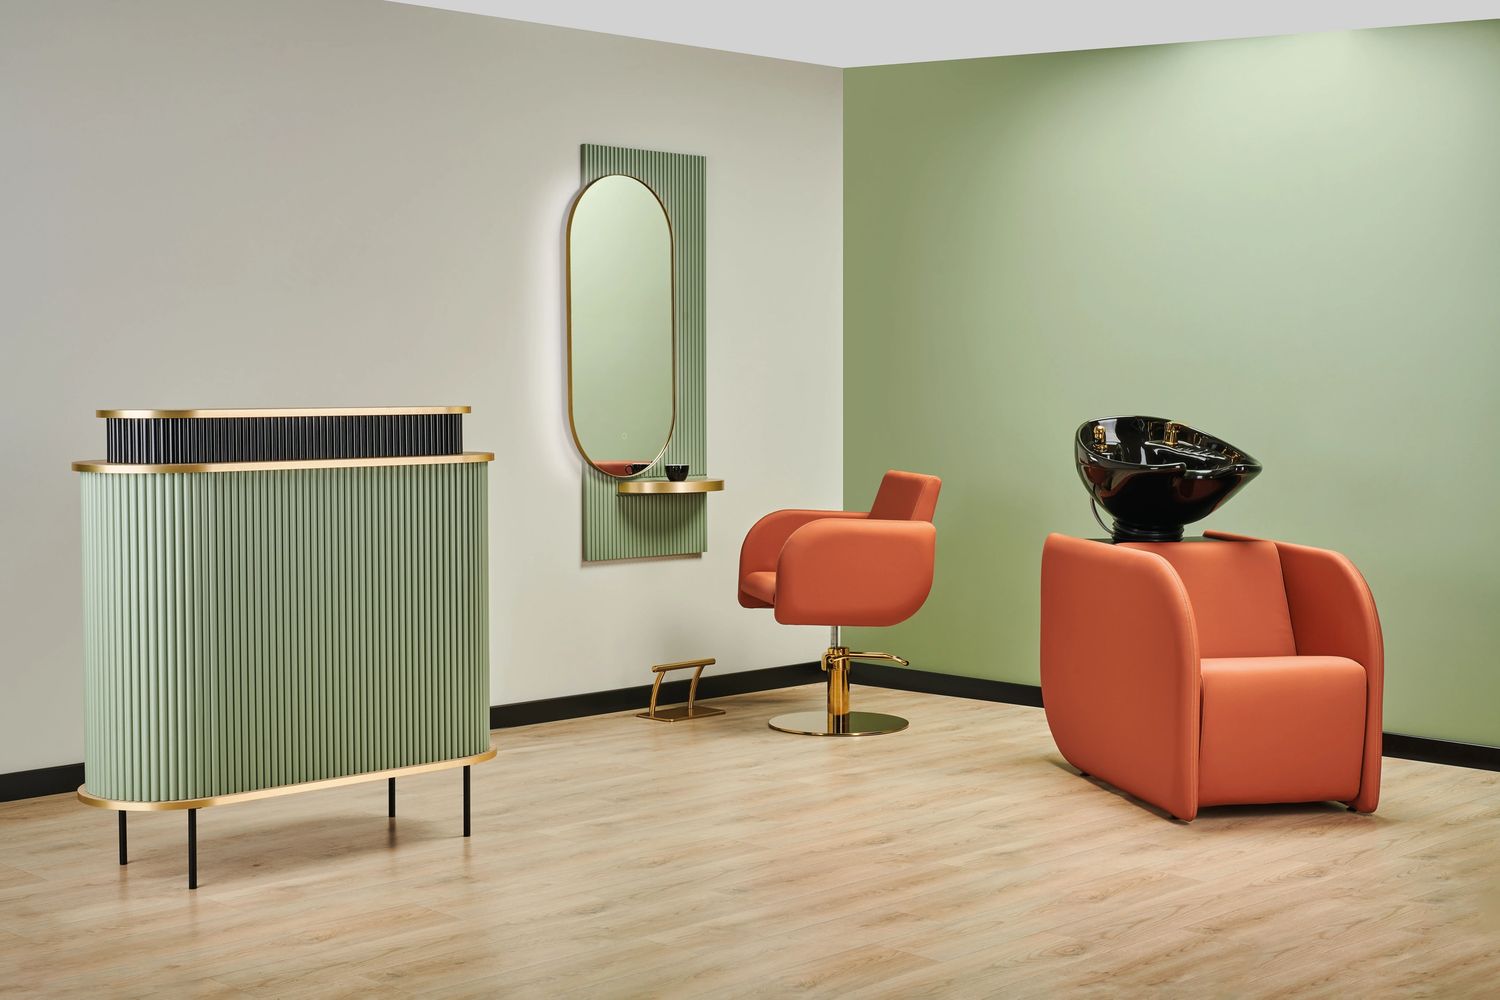 New 2024 salon furniture, created by our salon design team, who designing many salon interior ideas